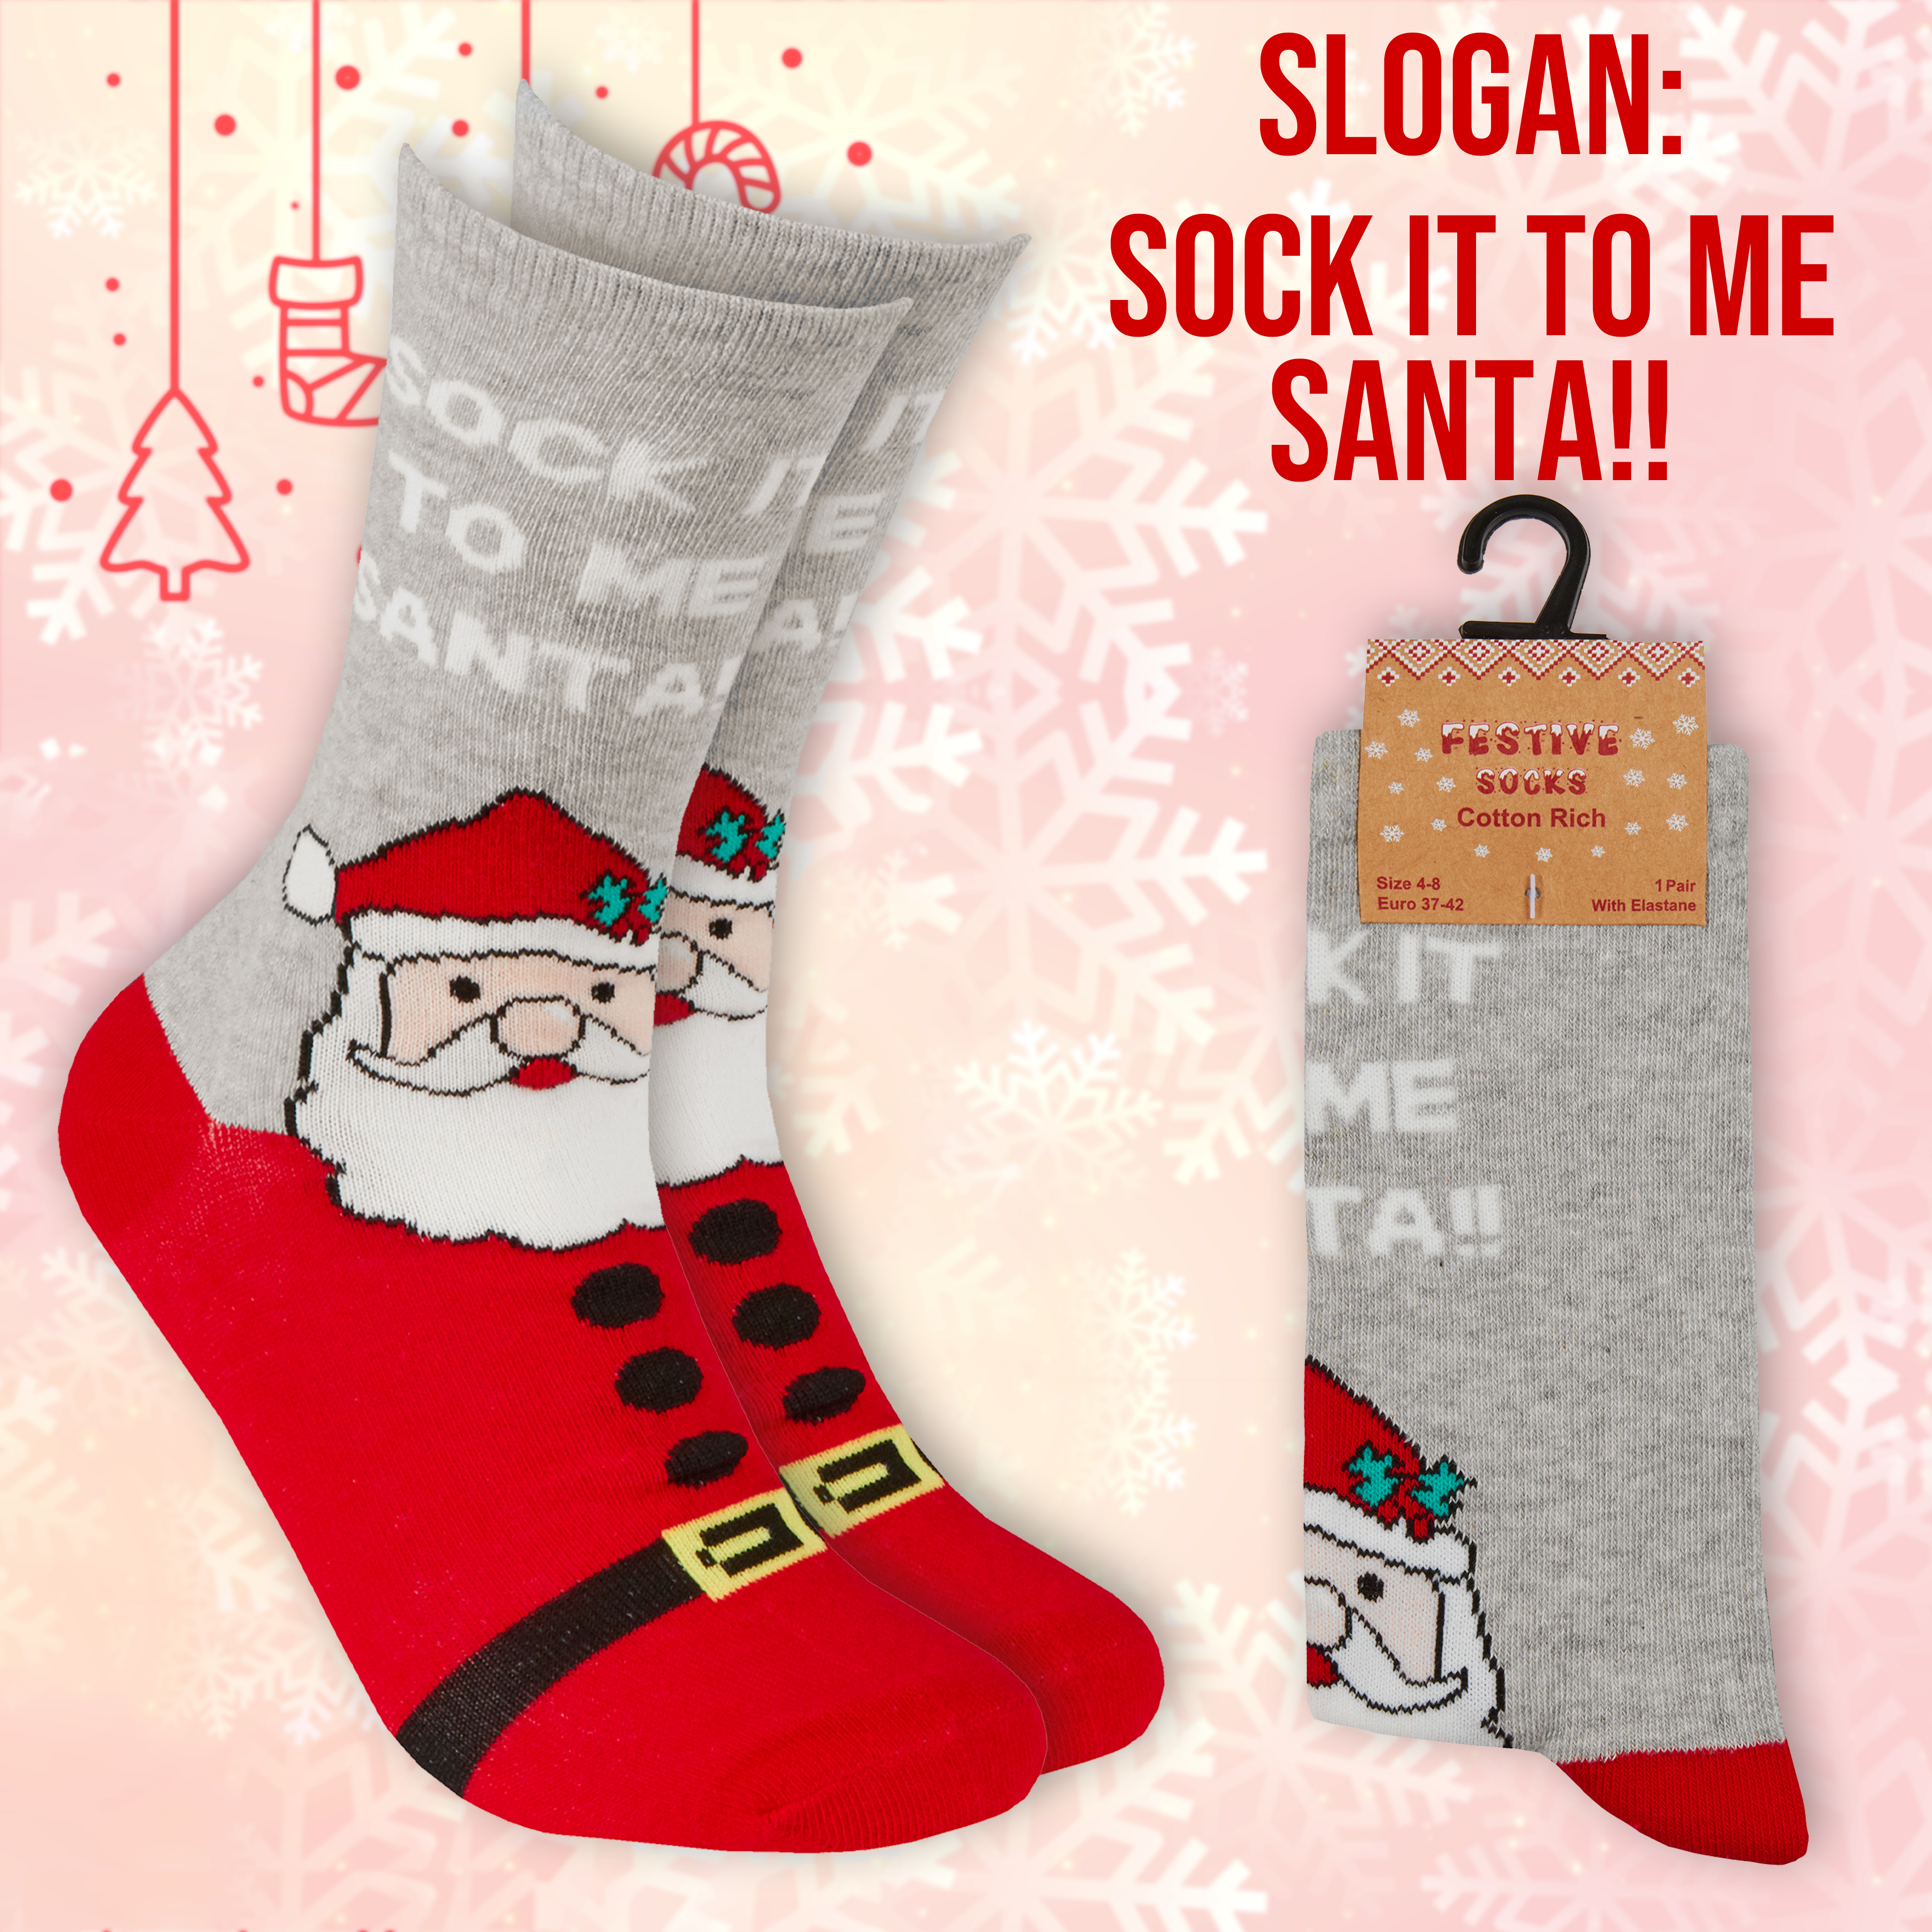 New Ladies Women Novelty Socks Cotton Funny Slogan Birthday & Christmas Gift 4-8 